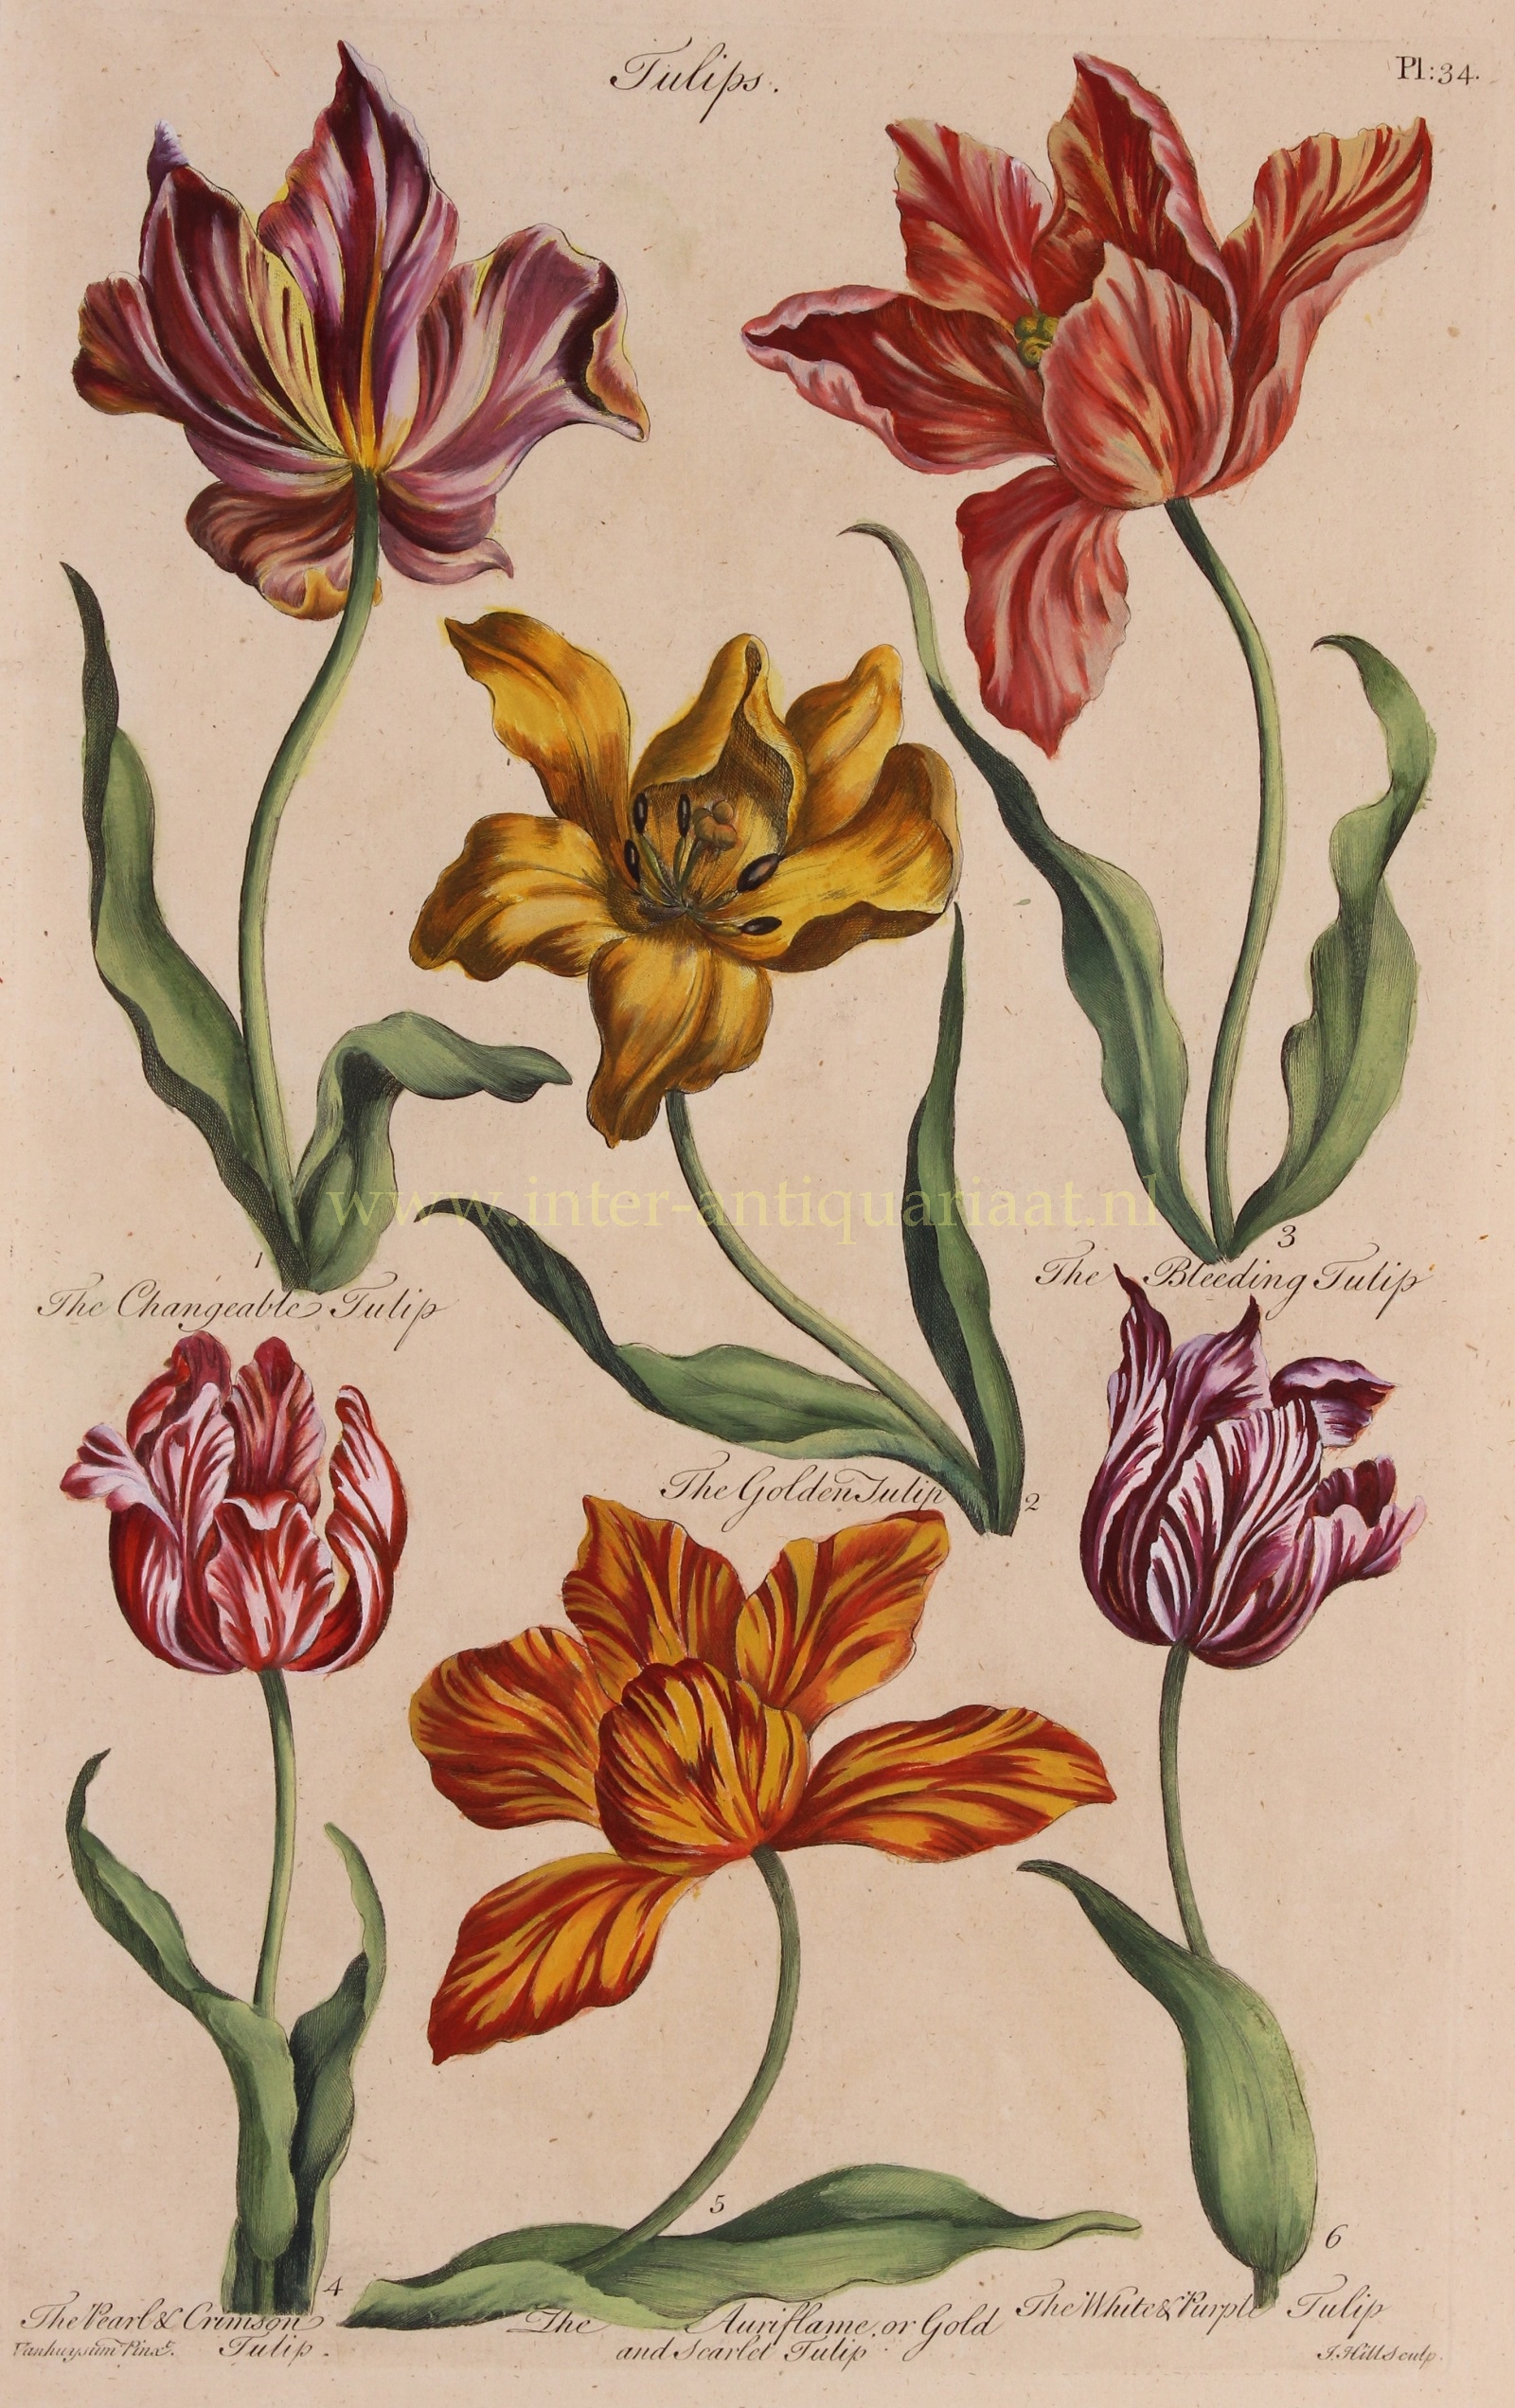  - Tulips - John Hill, 1756-57